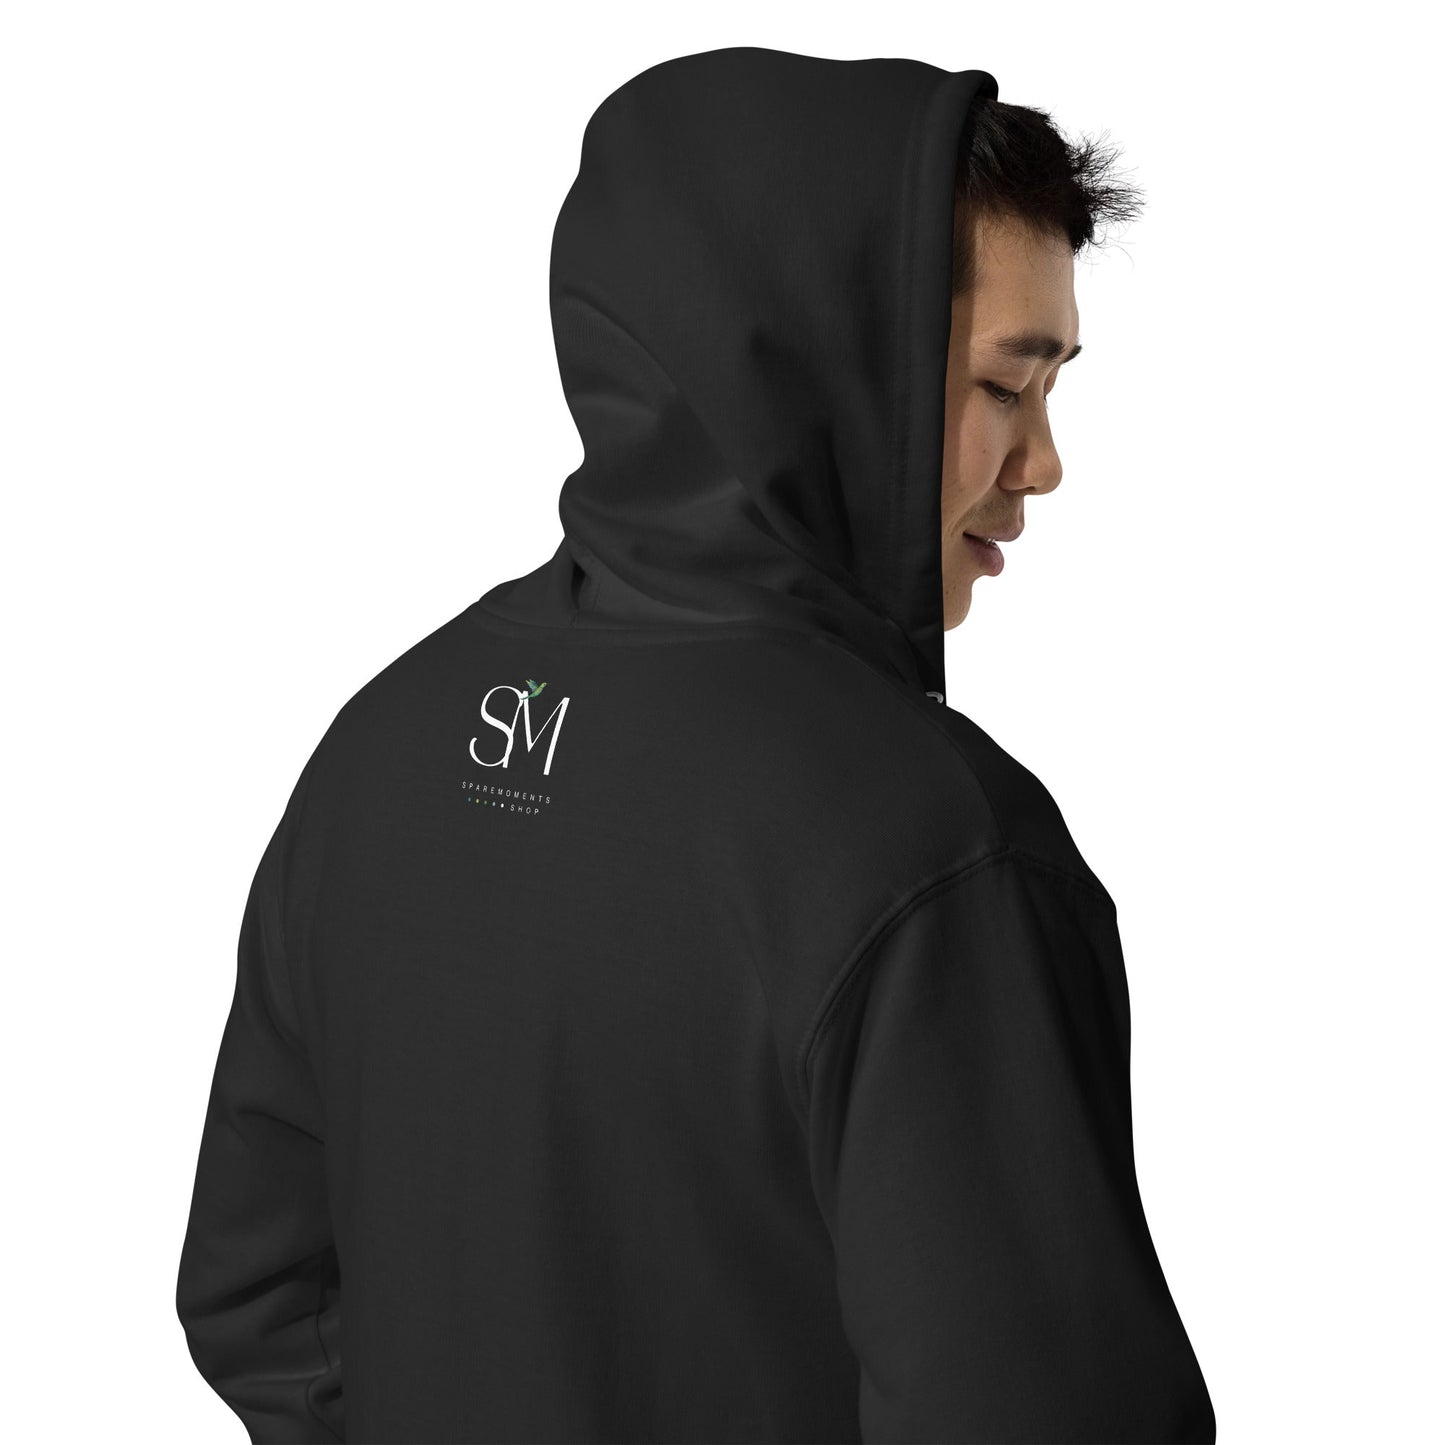 Fall Maple Leaf | Unisex fleece zip up hoodie